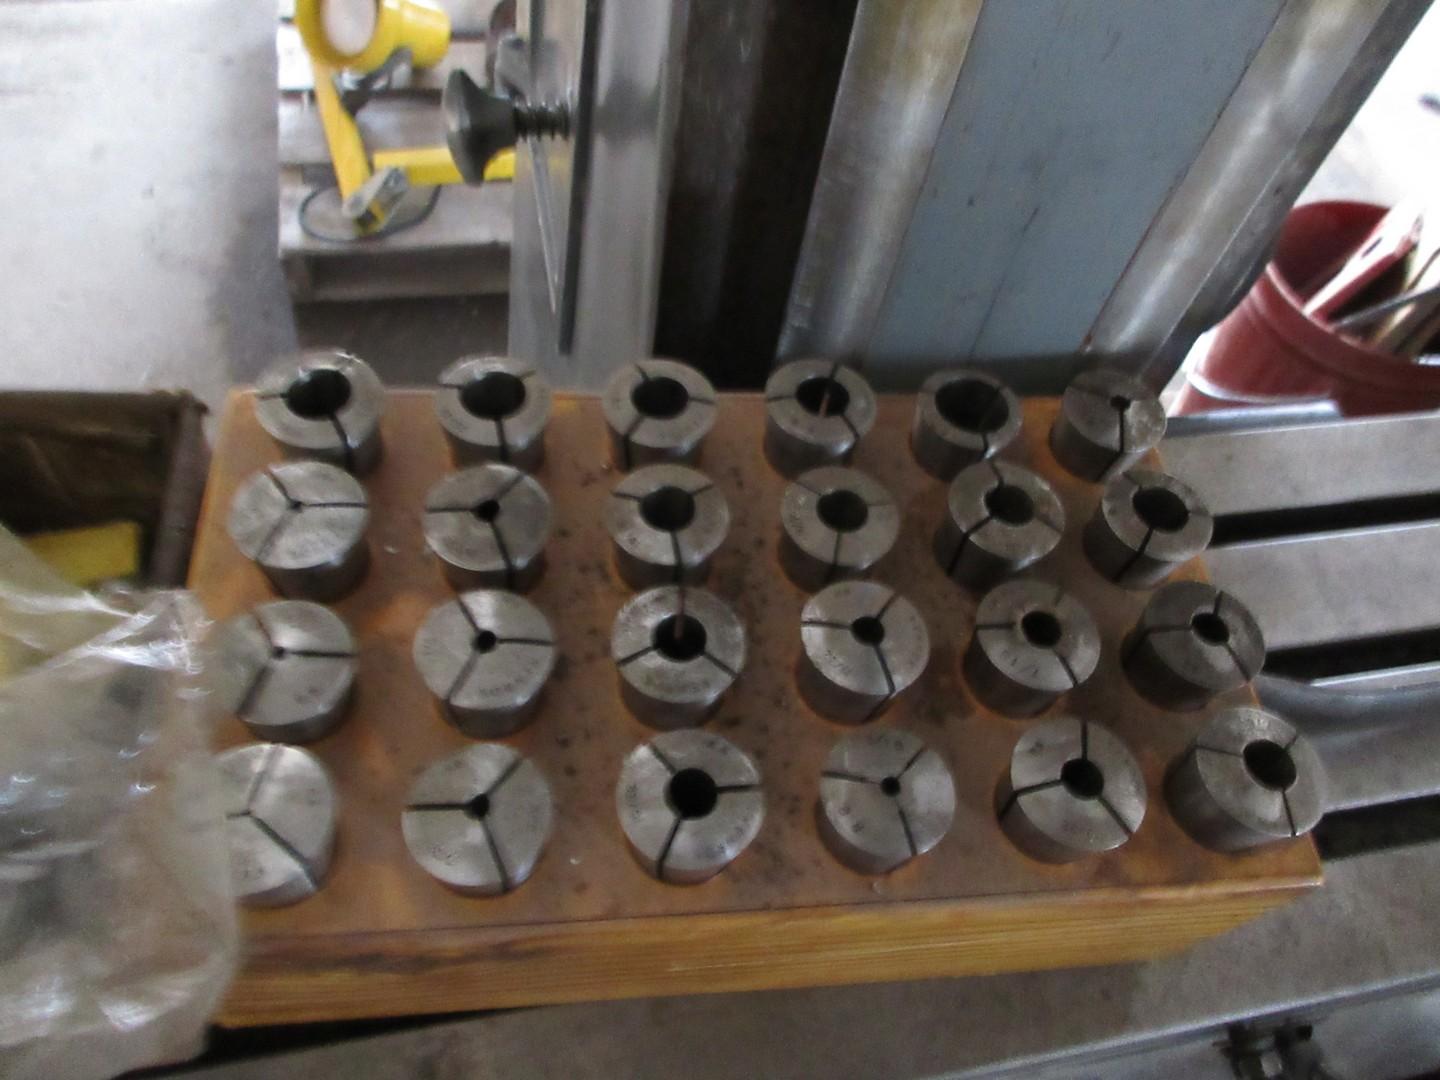 Marena Machinery Drill Press